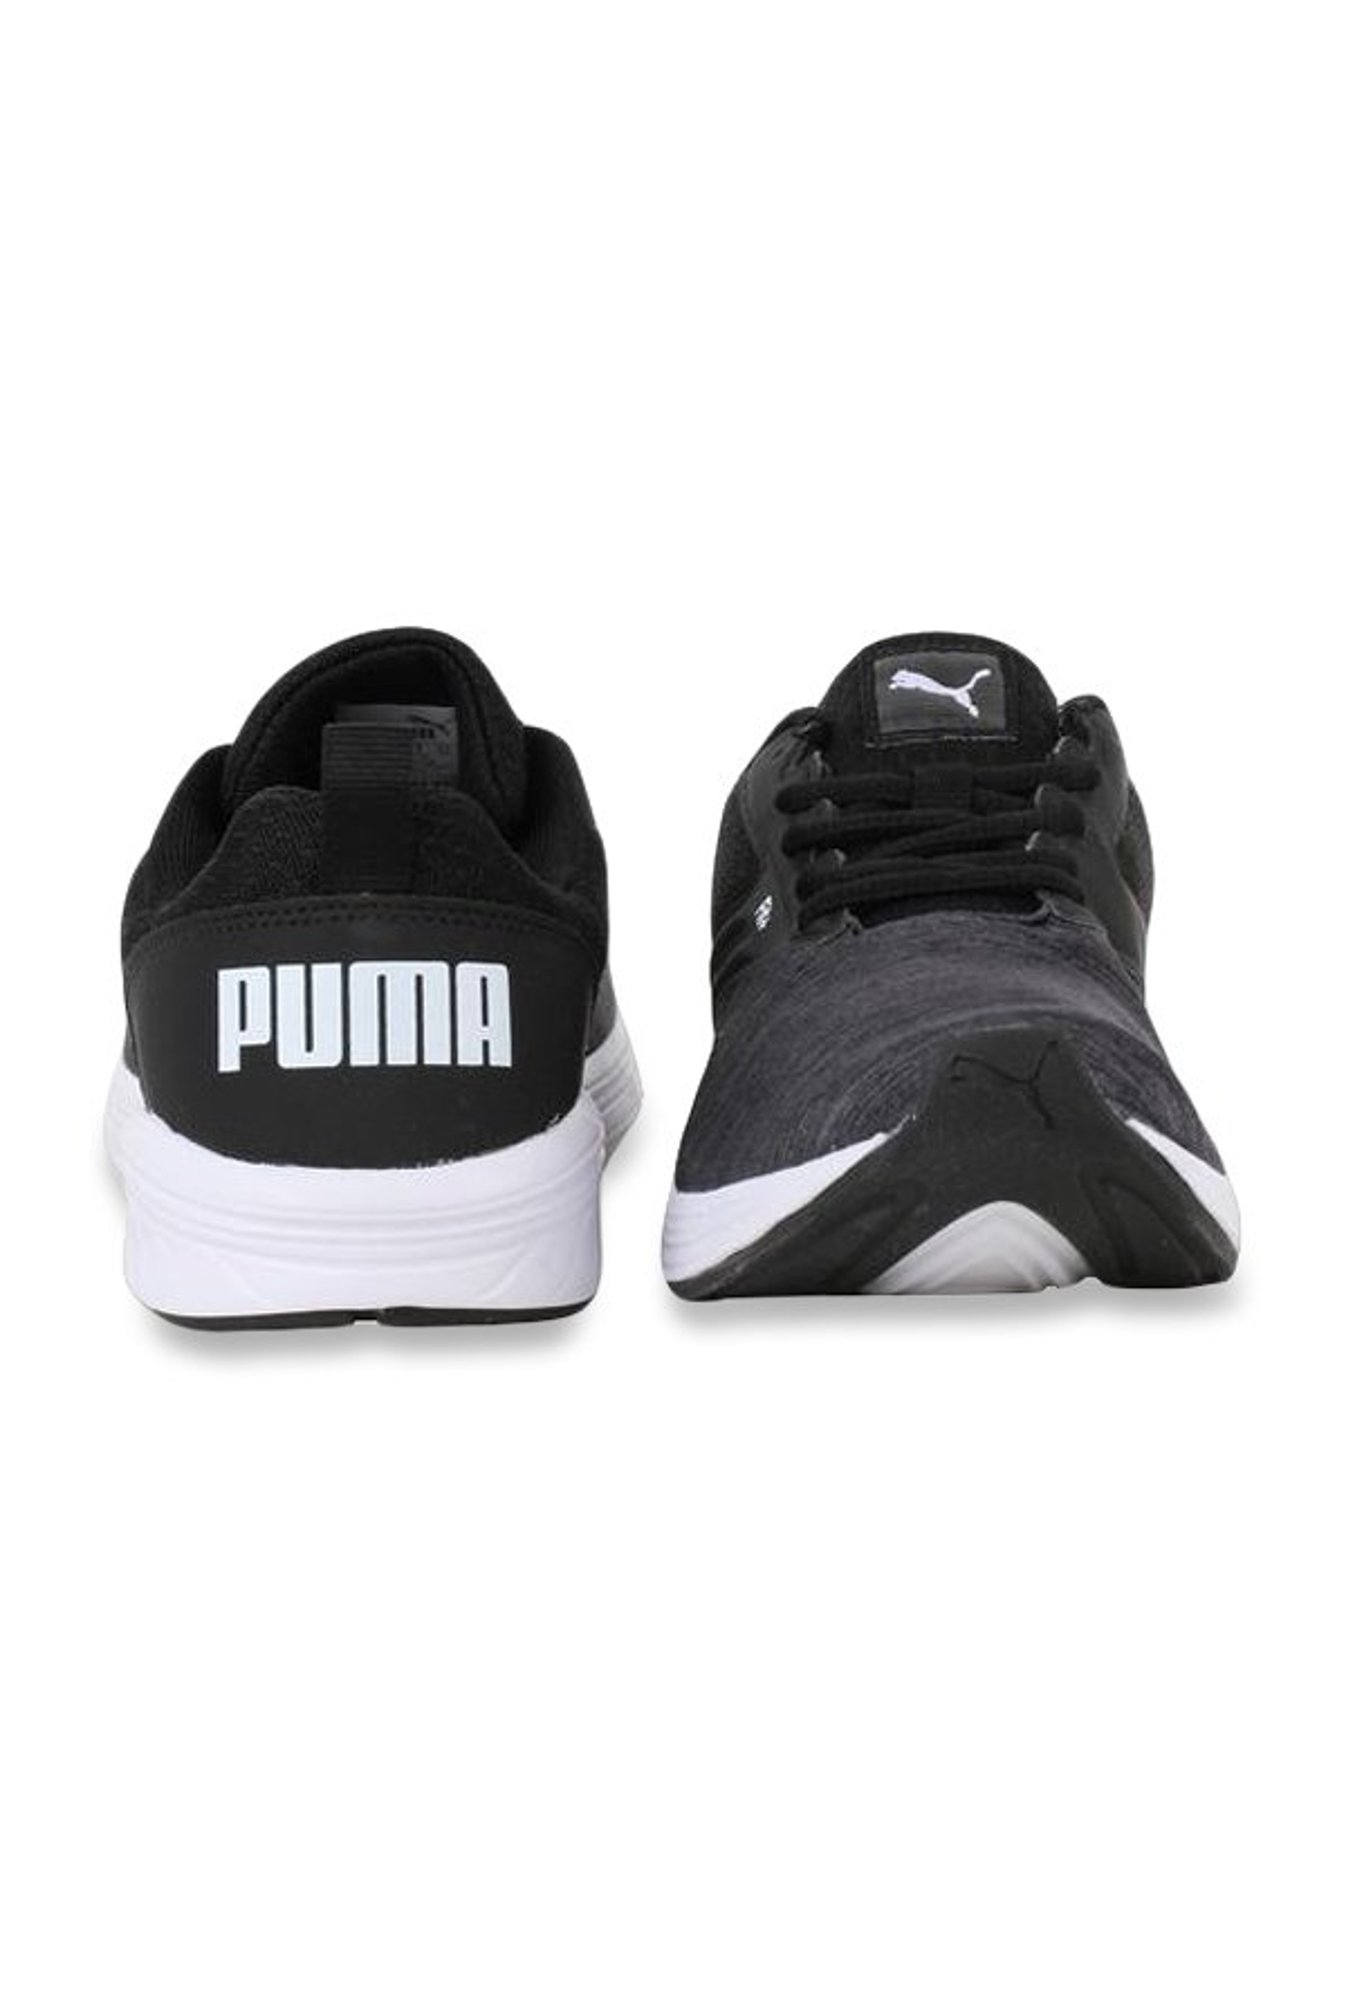 Buy Puma Comet IPD Black Running Shoes 